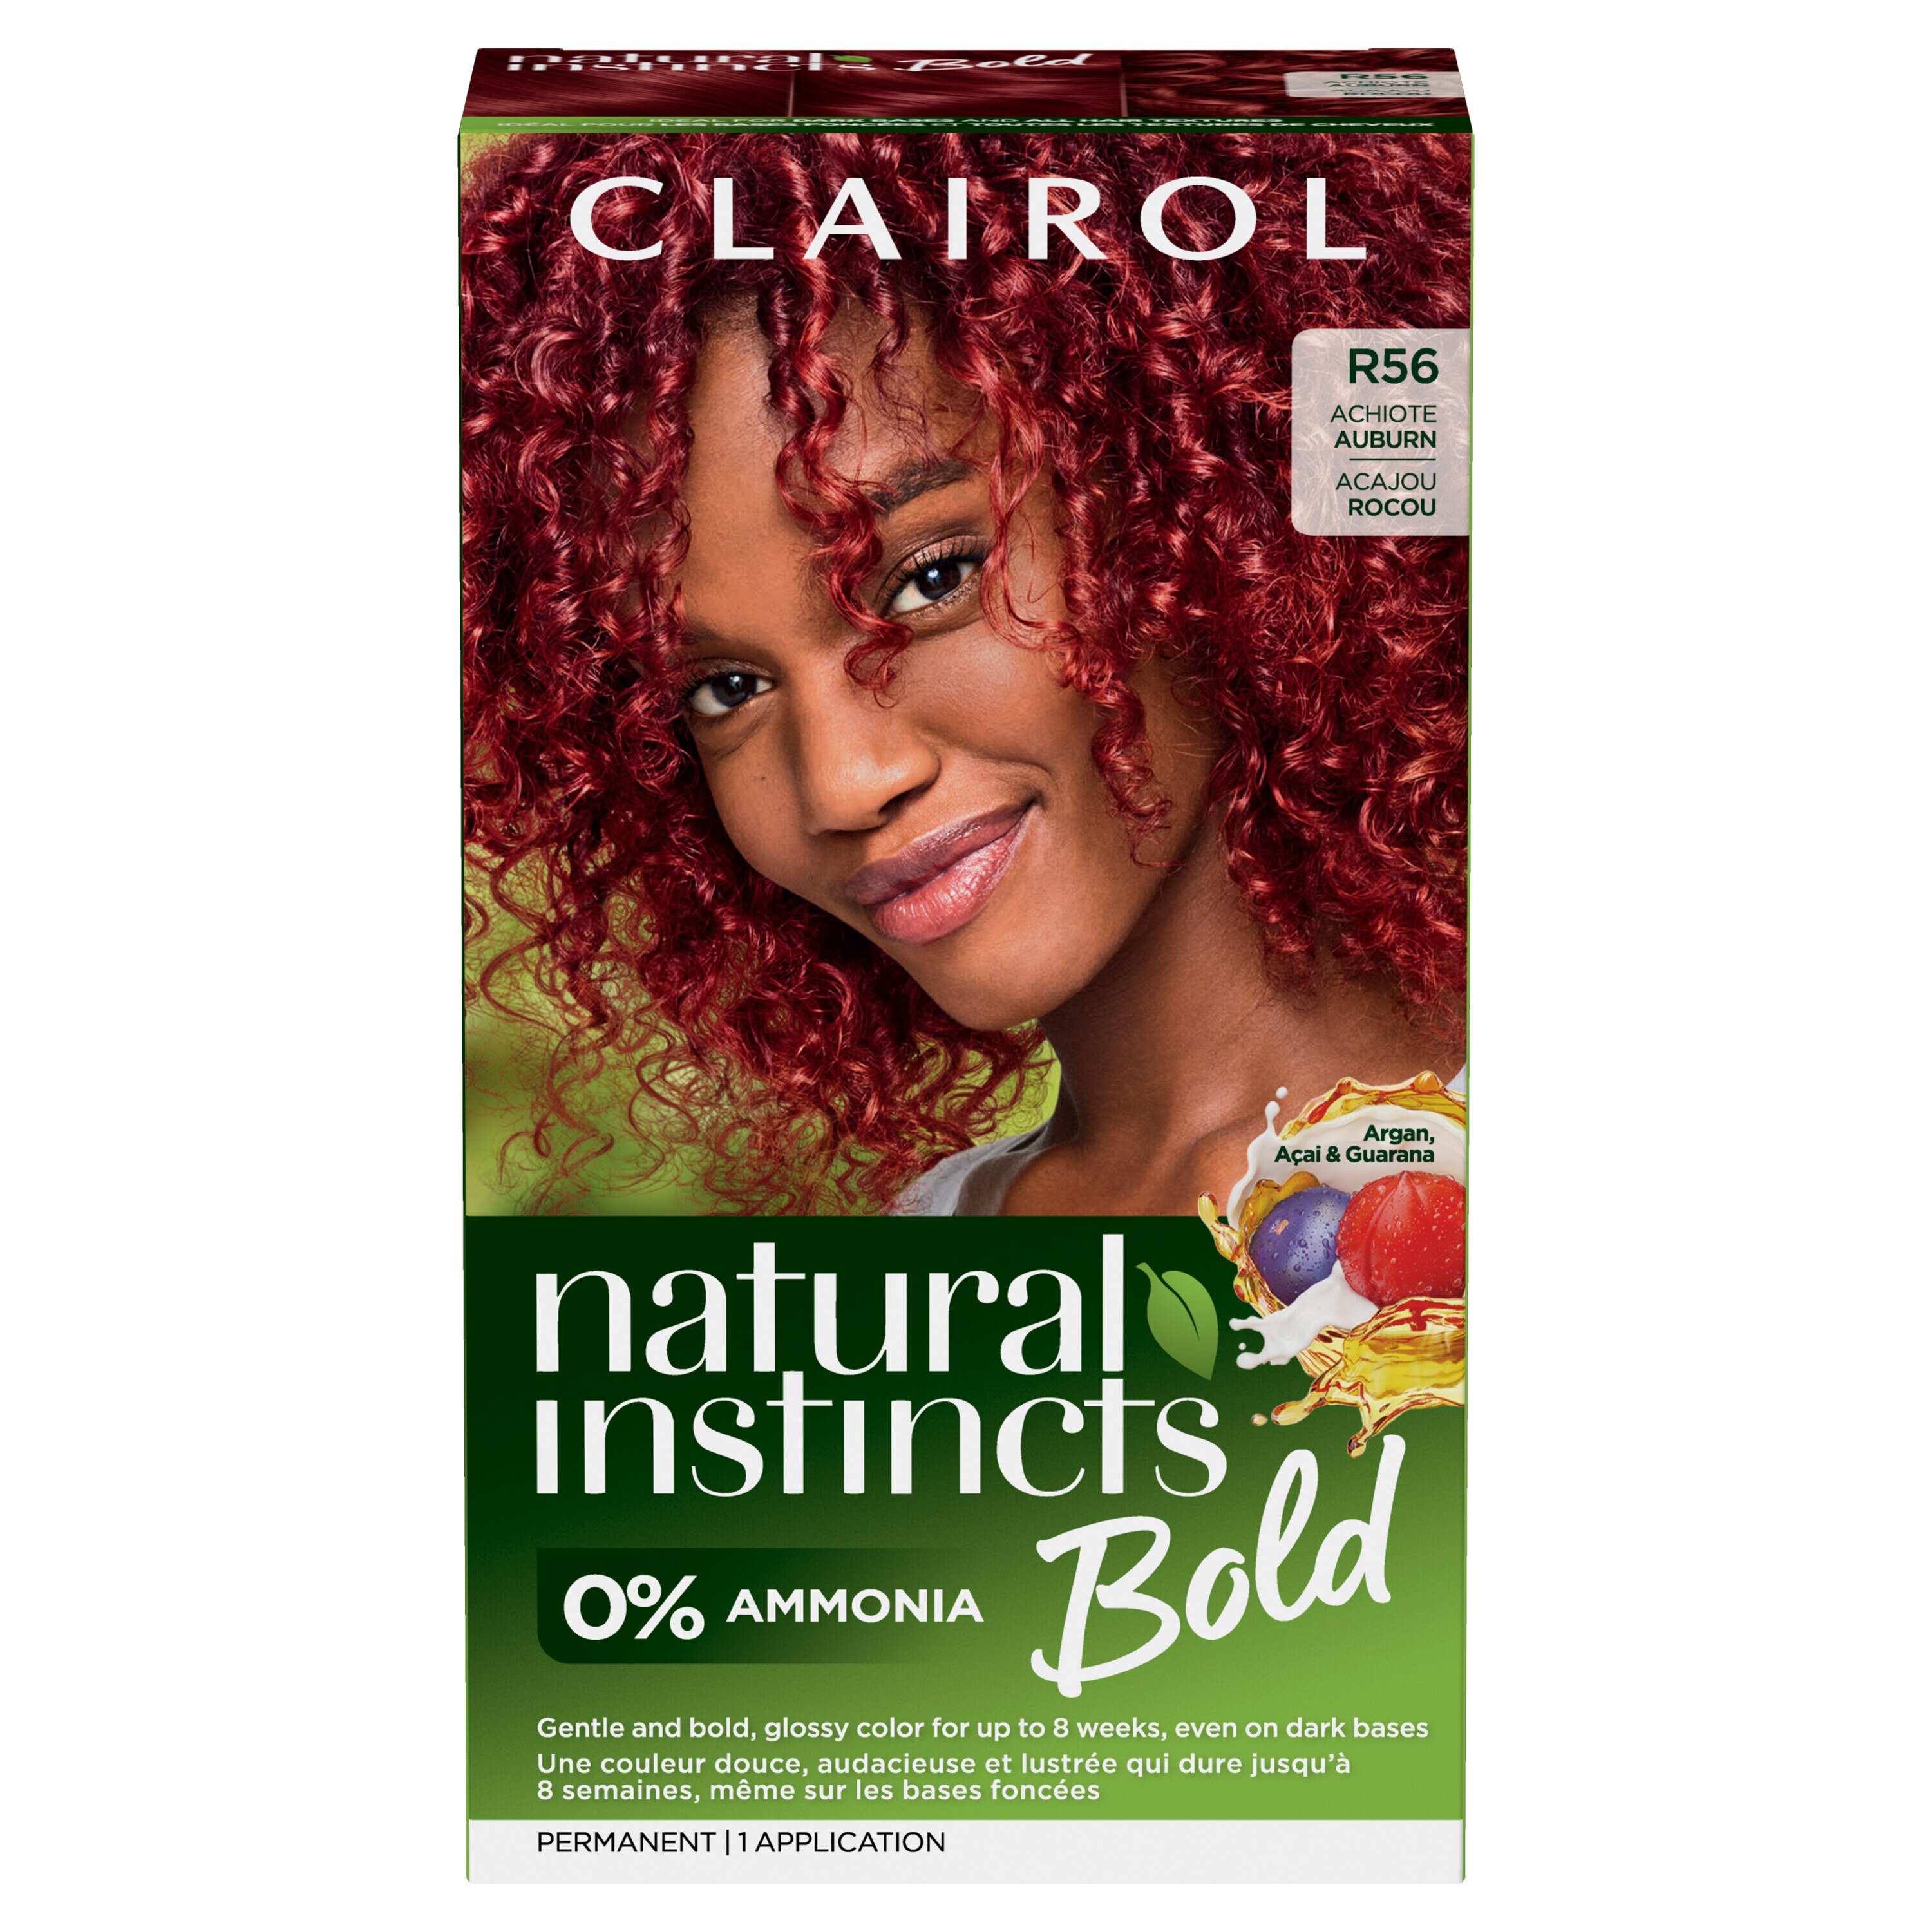 Clairol Natural Instincts Bold Permanent Hair Color, R56 Achiote Auburn , CVS